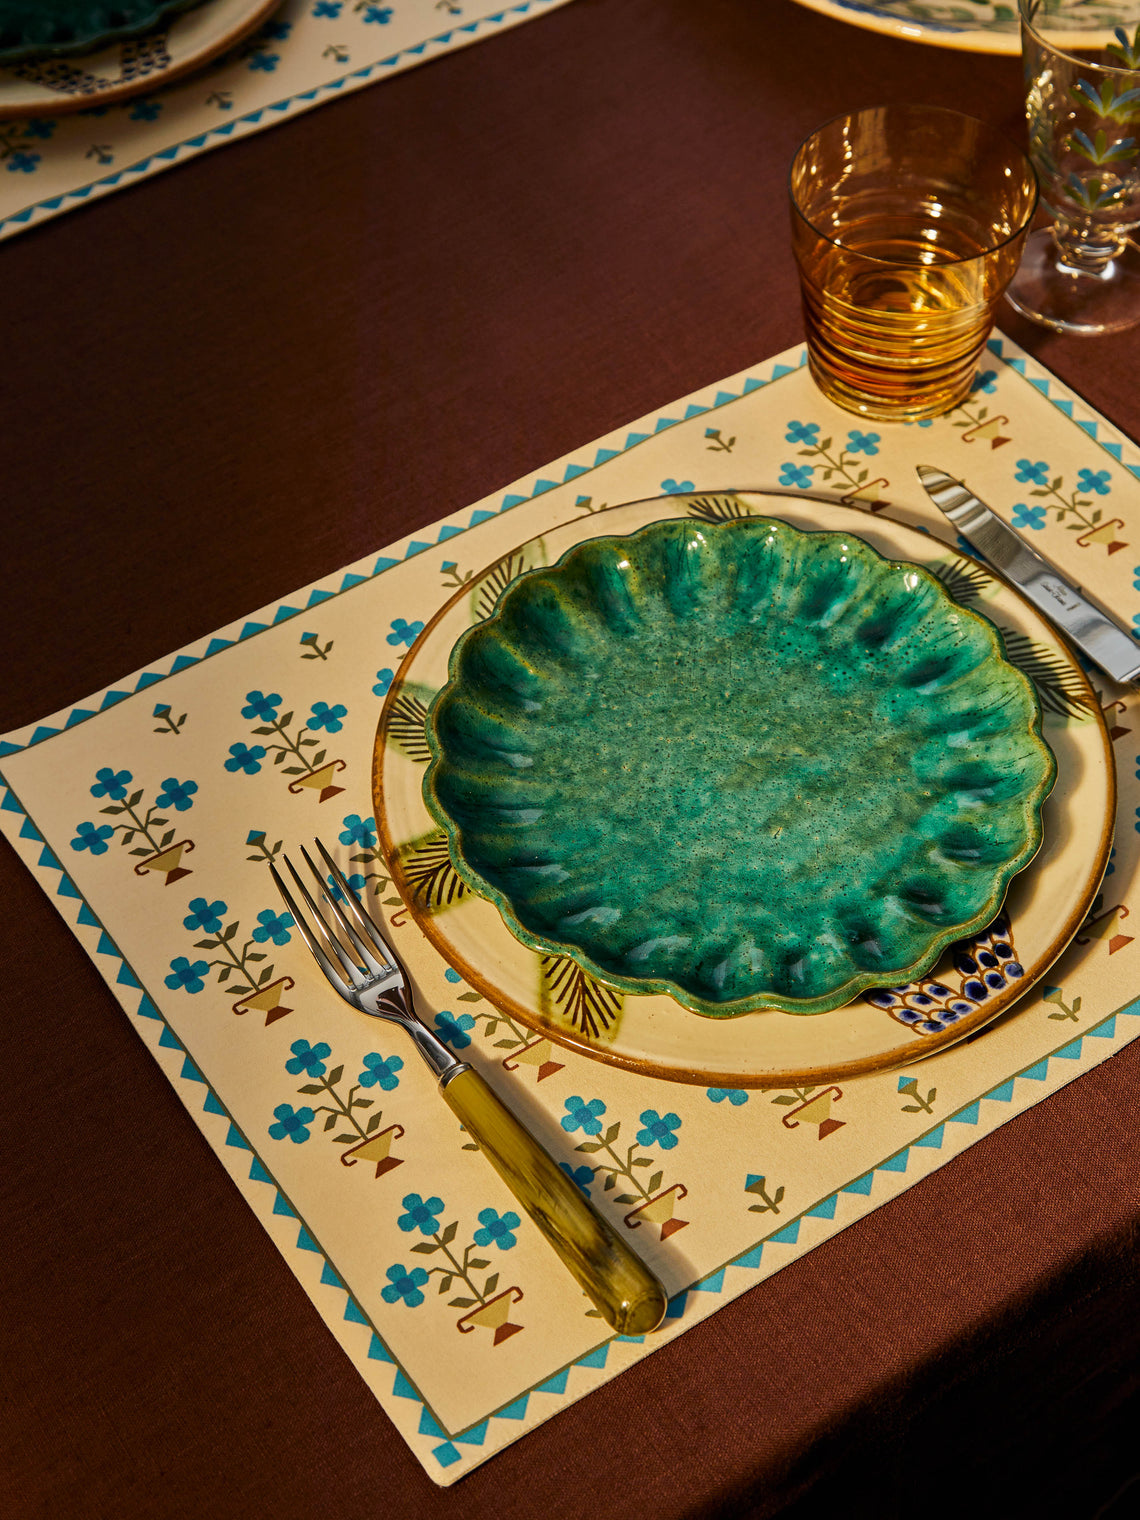 Malaika - Ottoman Vase Hand-Printed Cotton Placemats (Set of 4) - Blue - ABASK